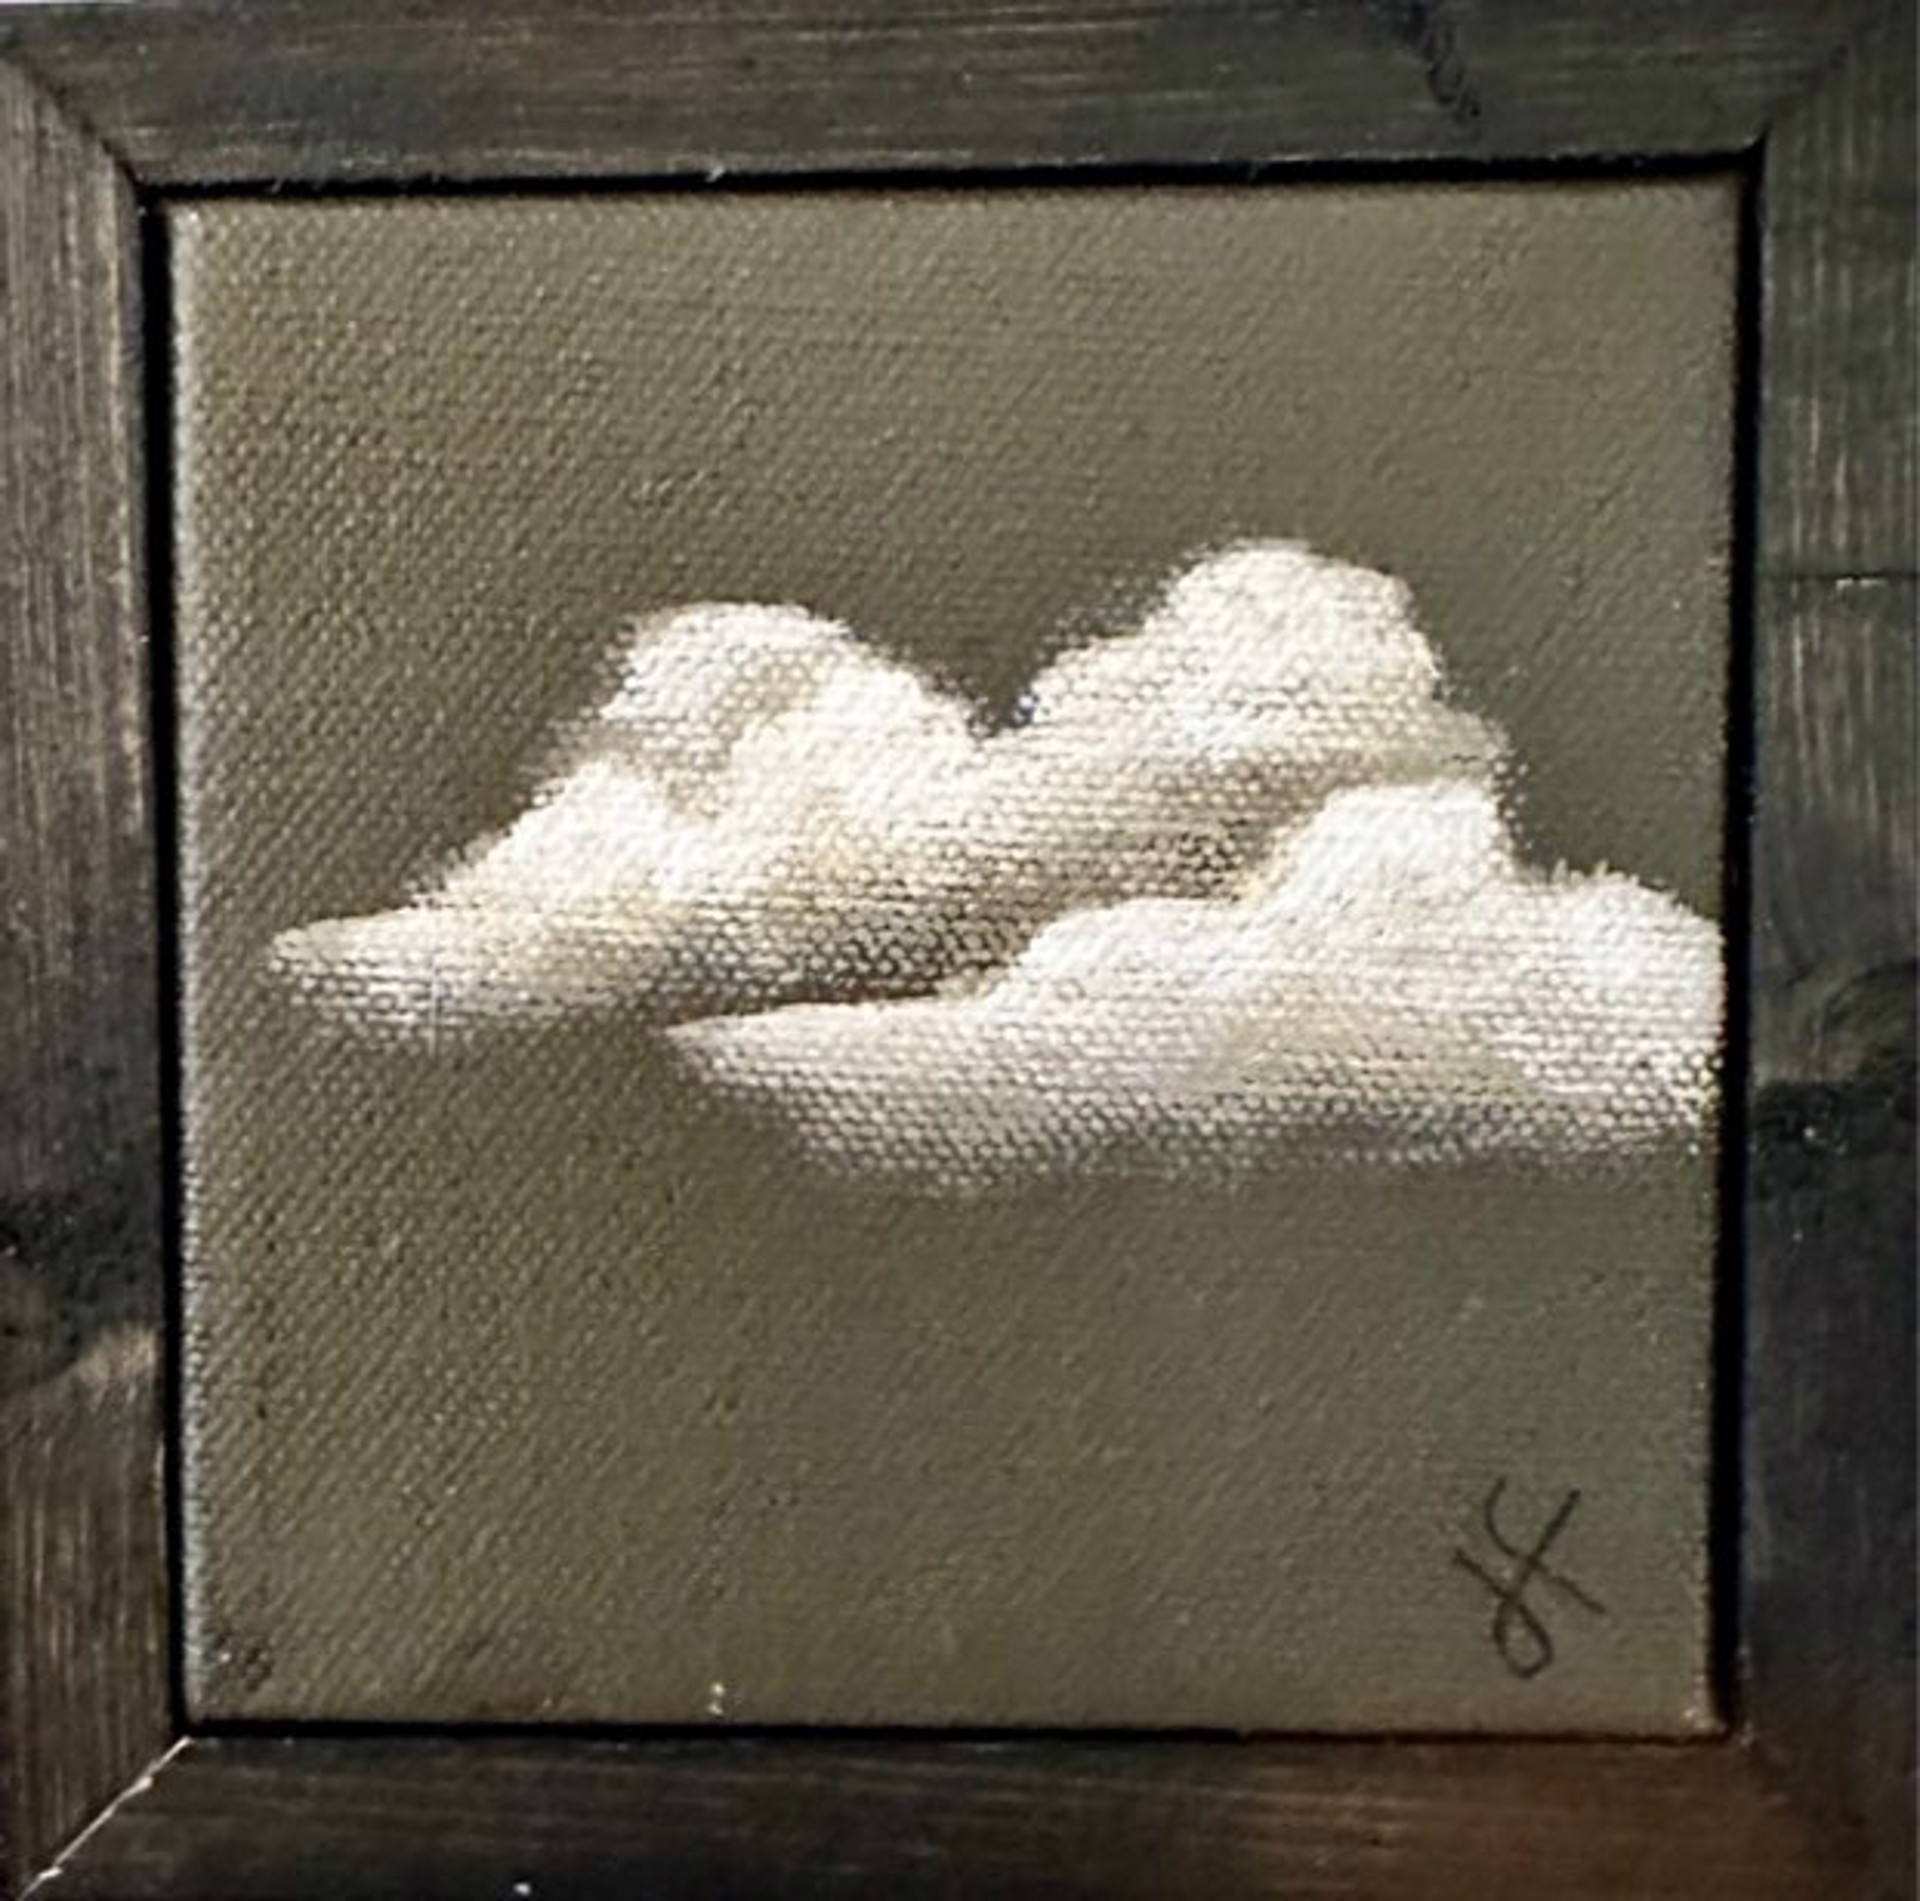 Cloud 2 by Dawn Martin Fischer